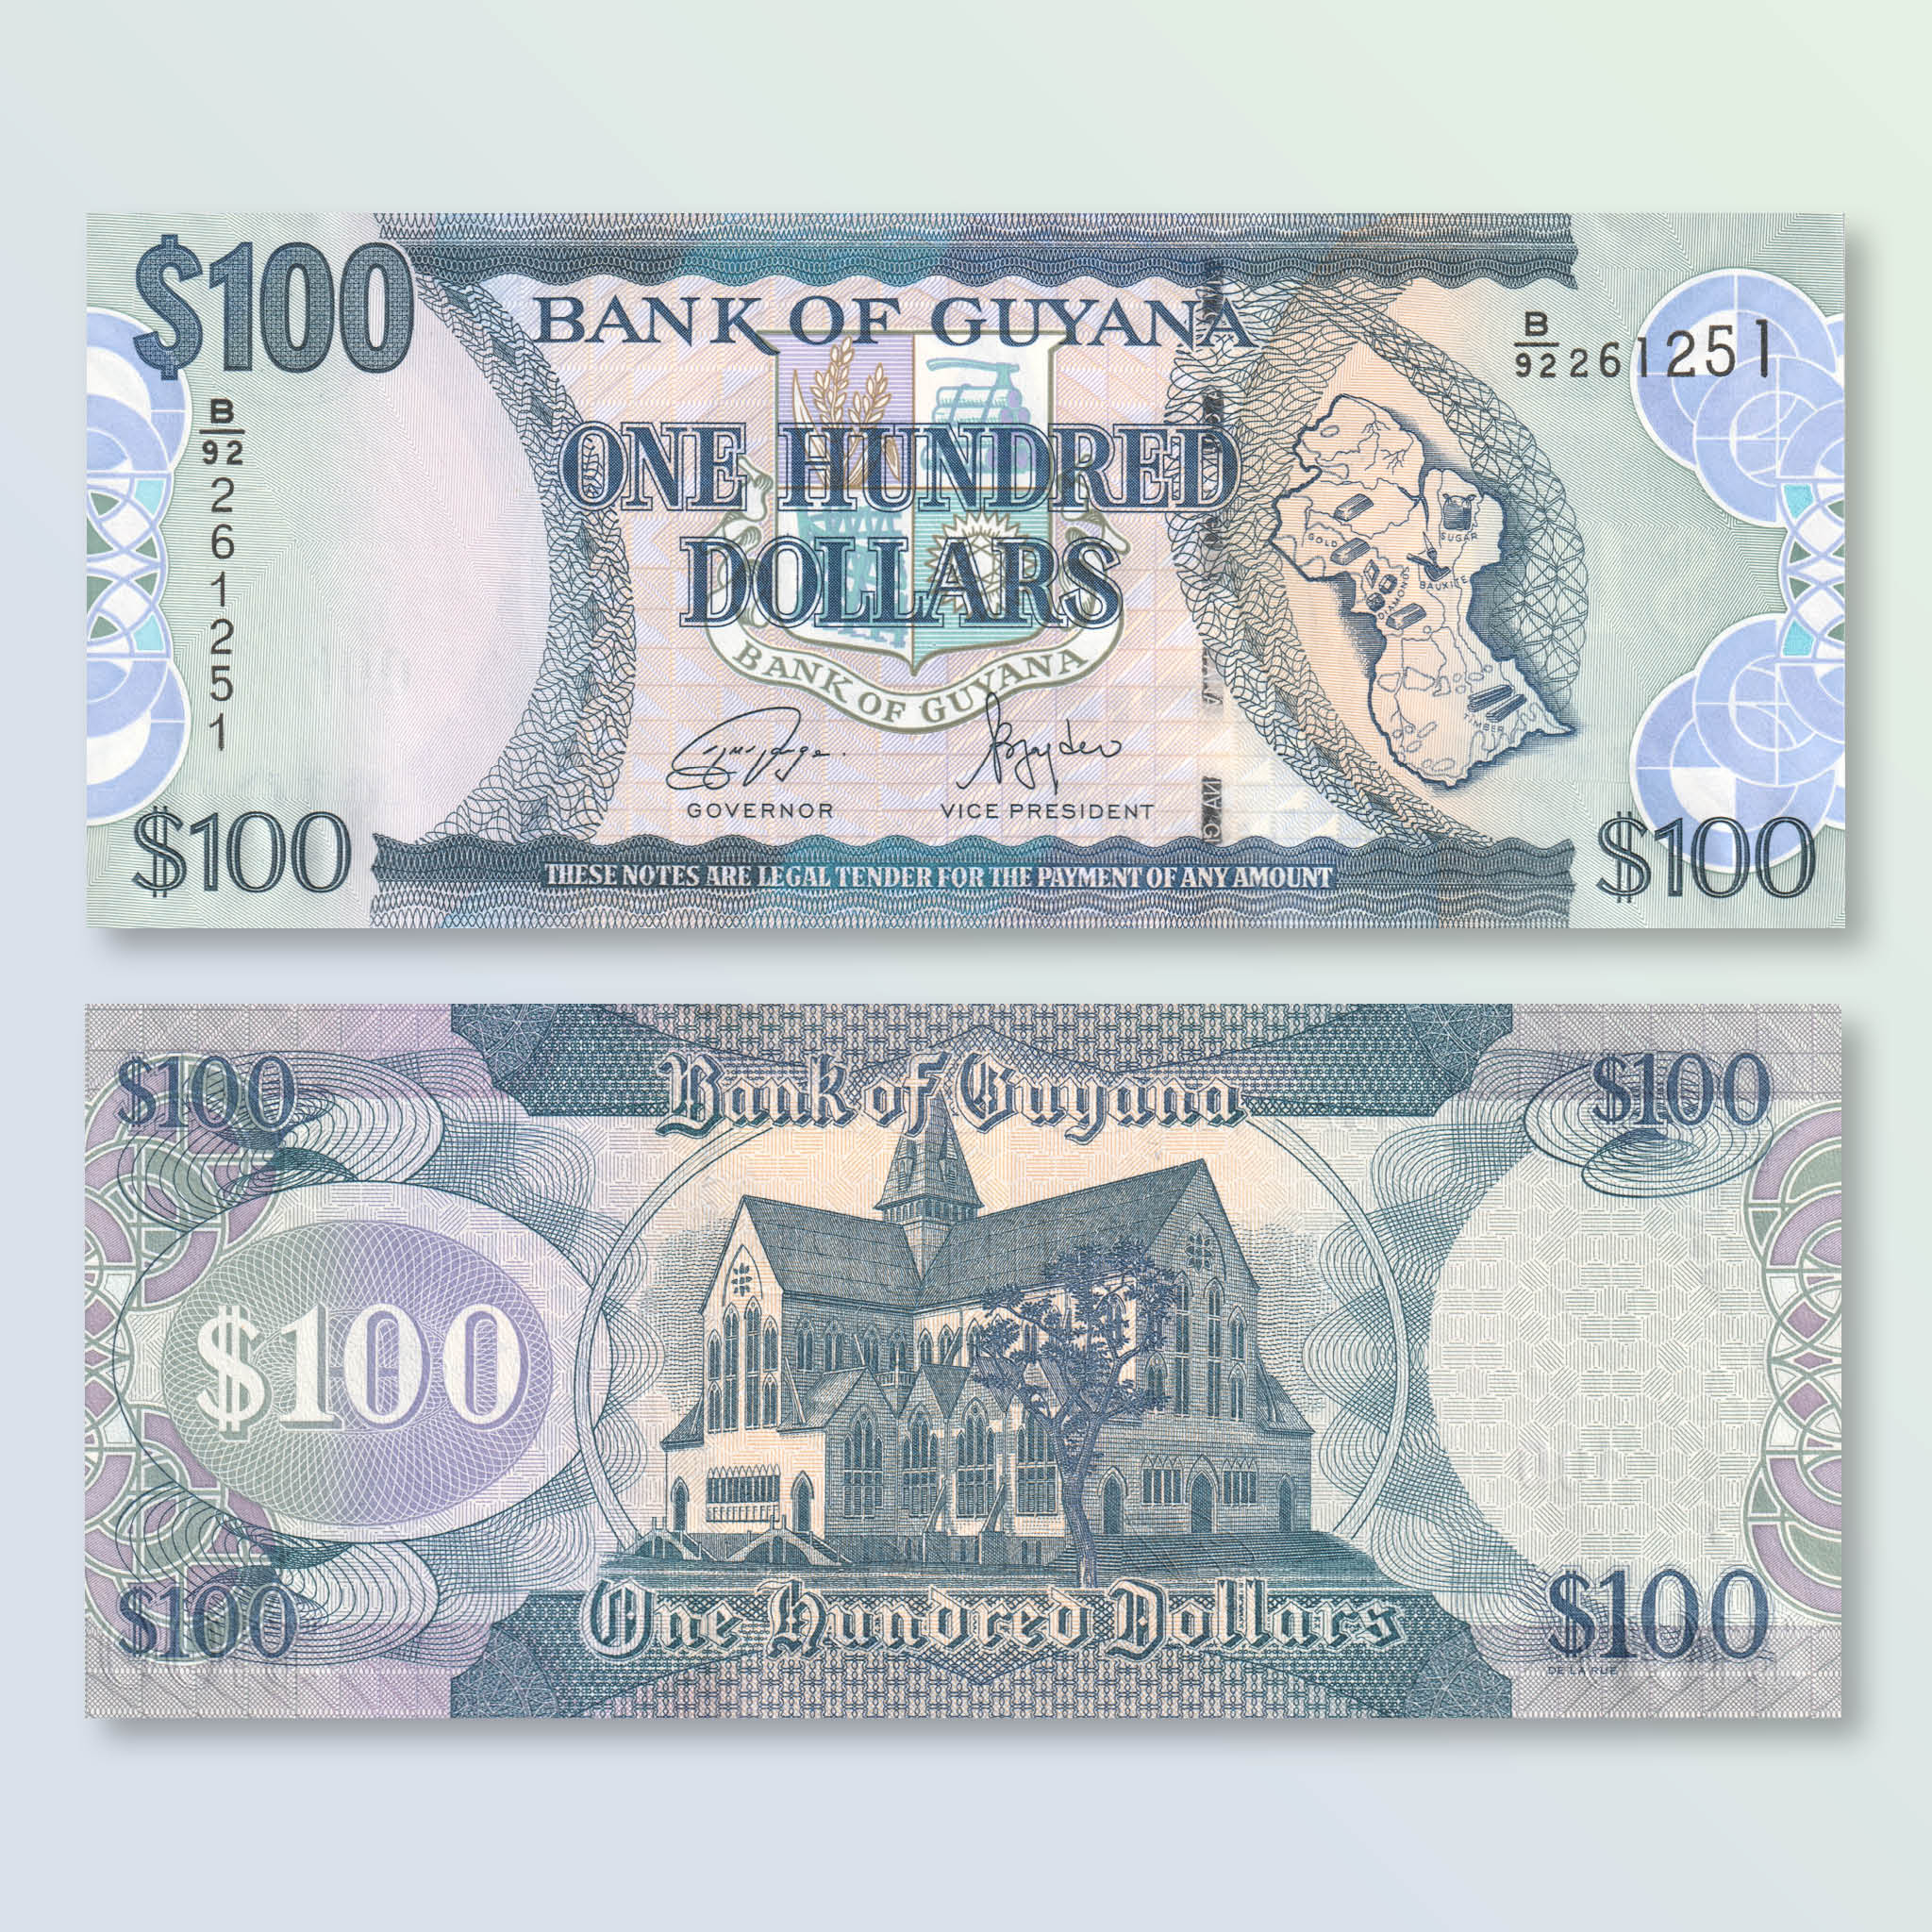 Guyana 100 Dollars, 2022, B114f, P36, UNC - Robert's World Money - World Banknotes